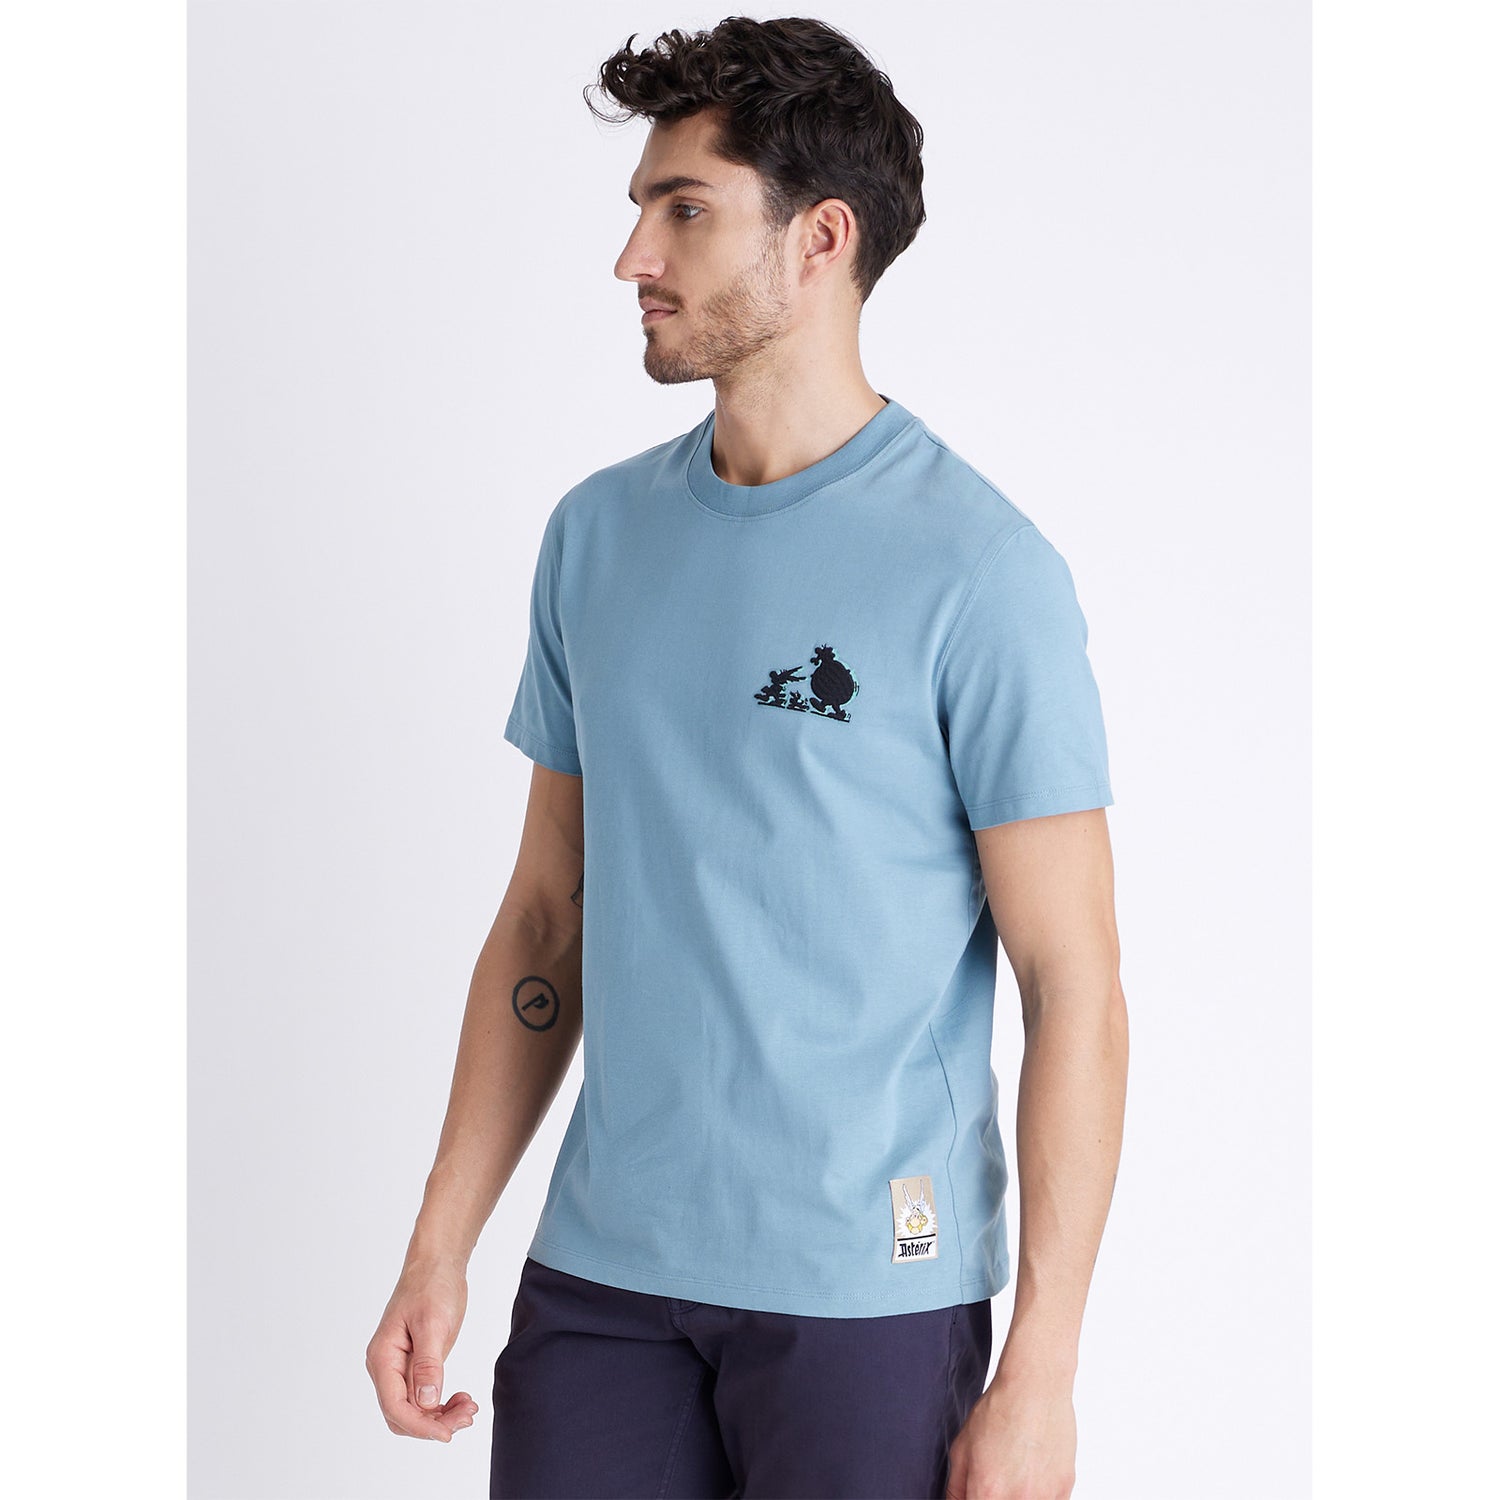 Asterix - Blue Printed Round Neck Cotton T-shirt (LDEASTE2)